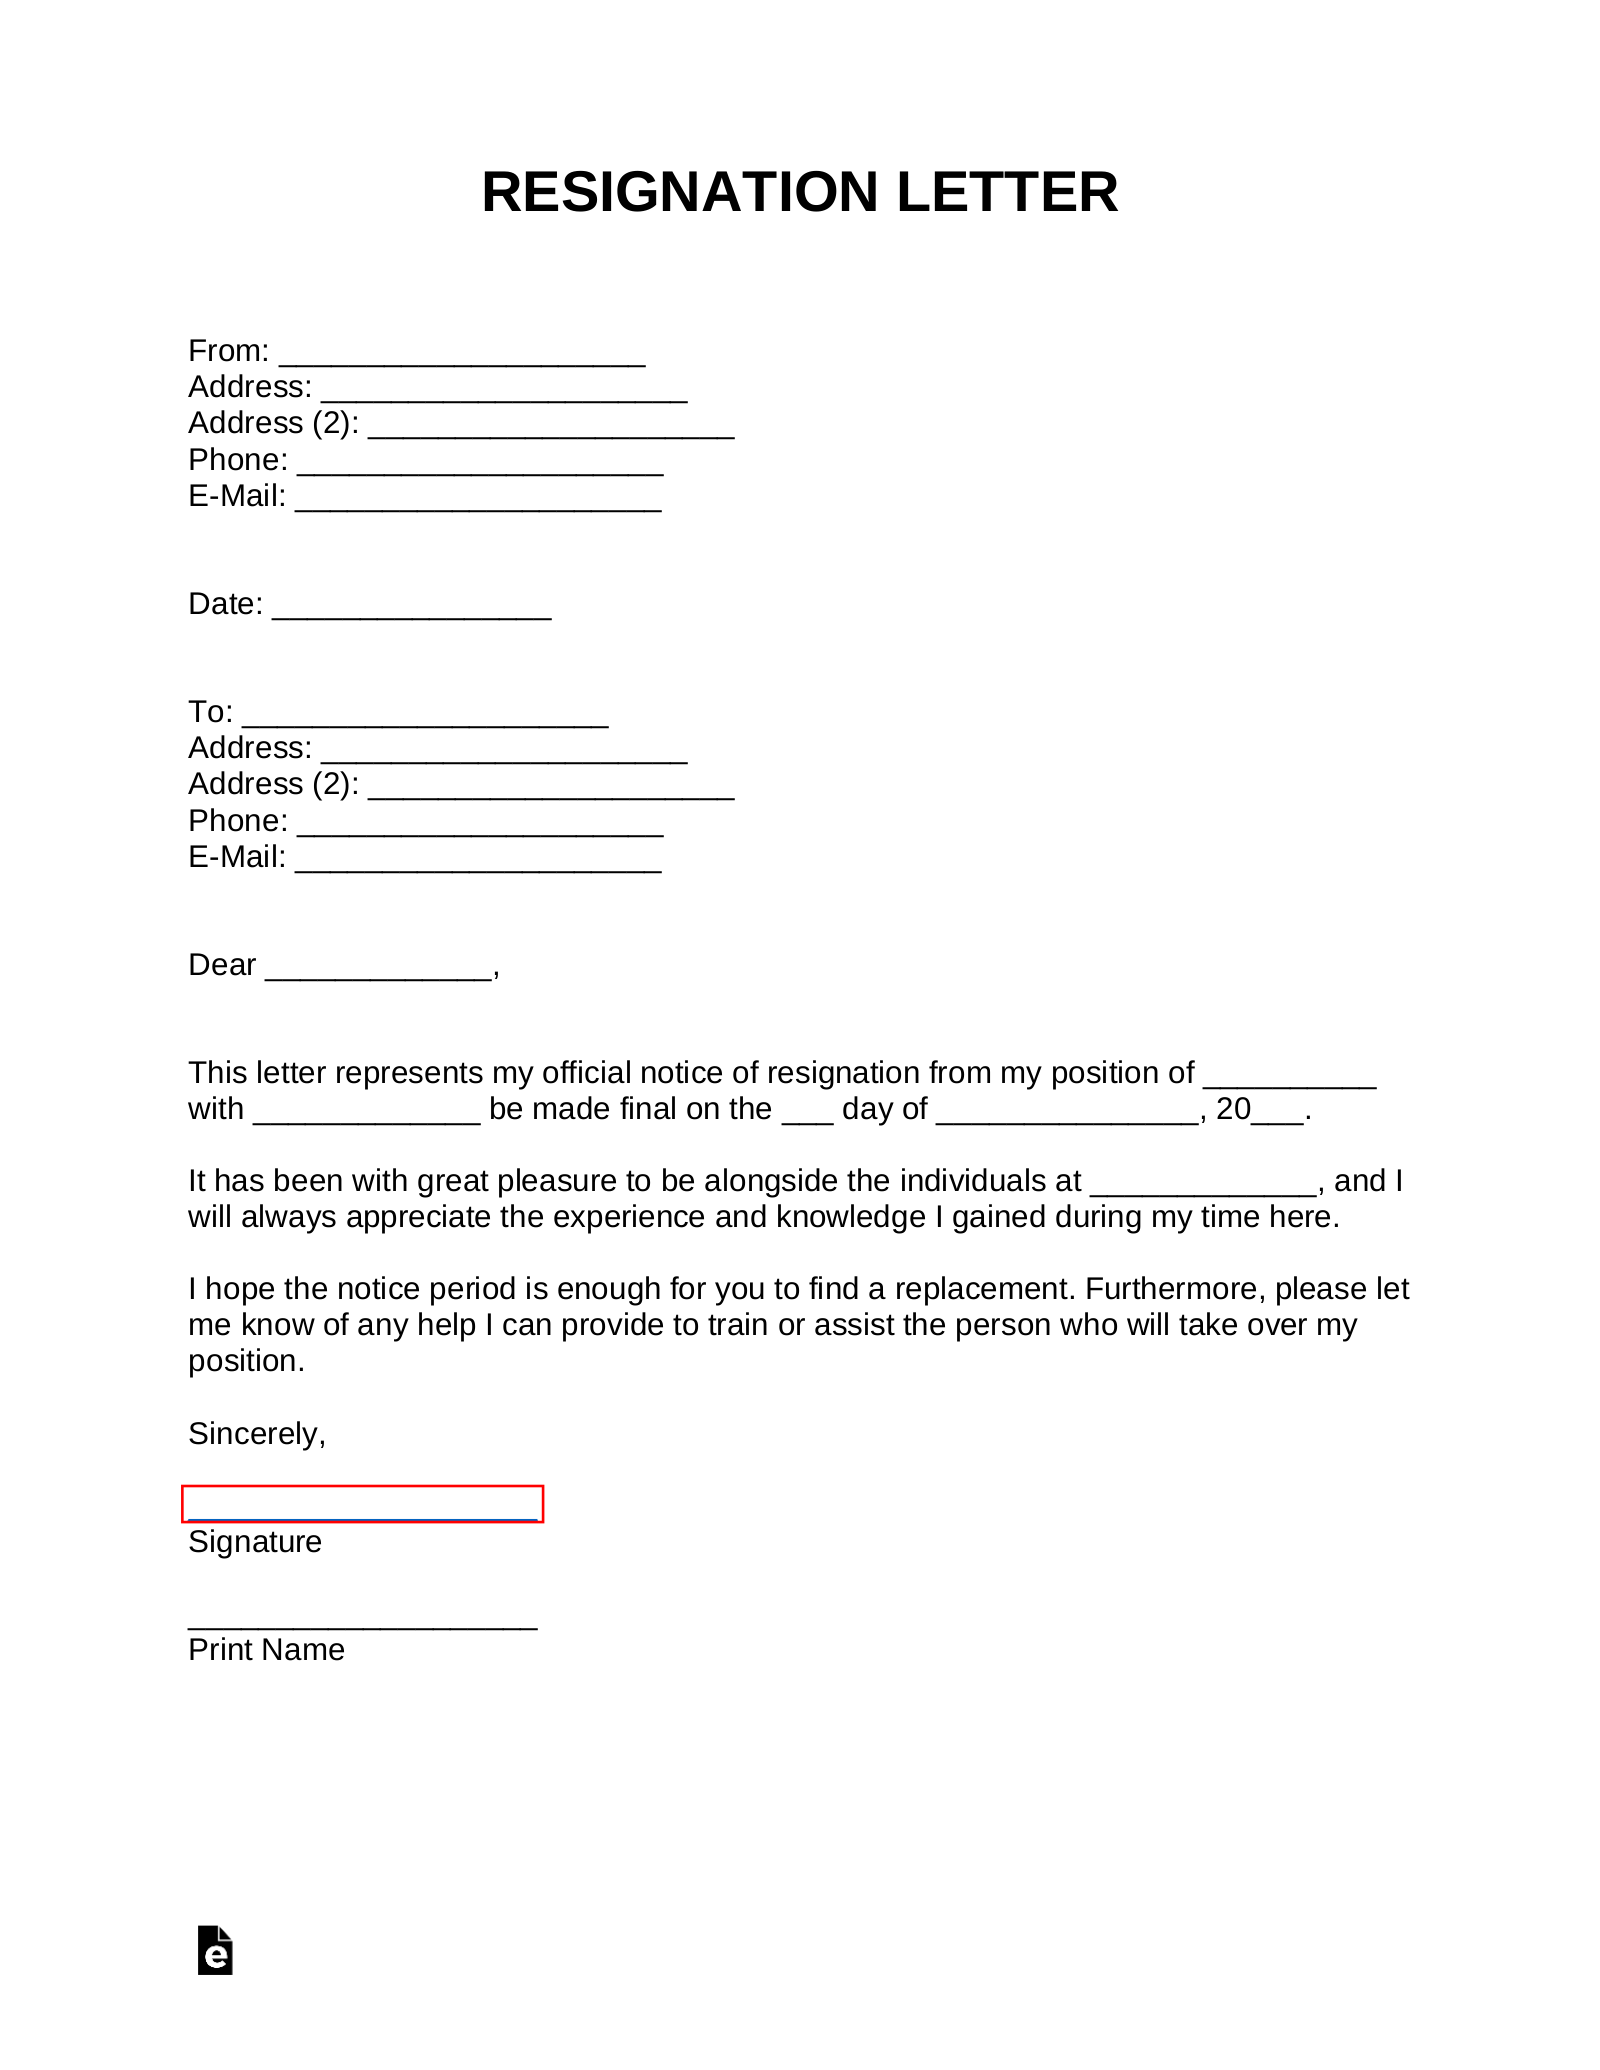 Resignation Letter Samples 2 Week Notice from eforms.com